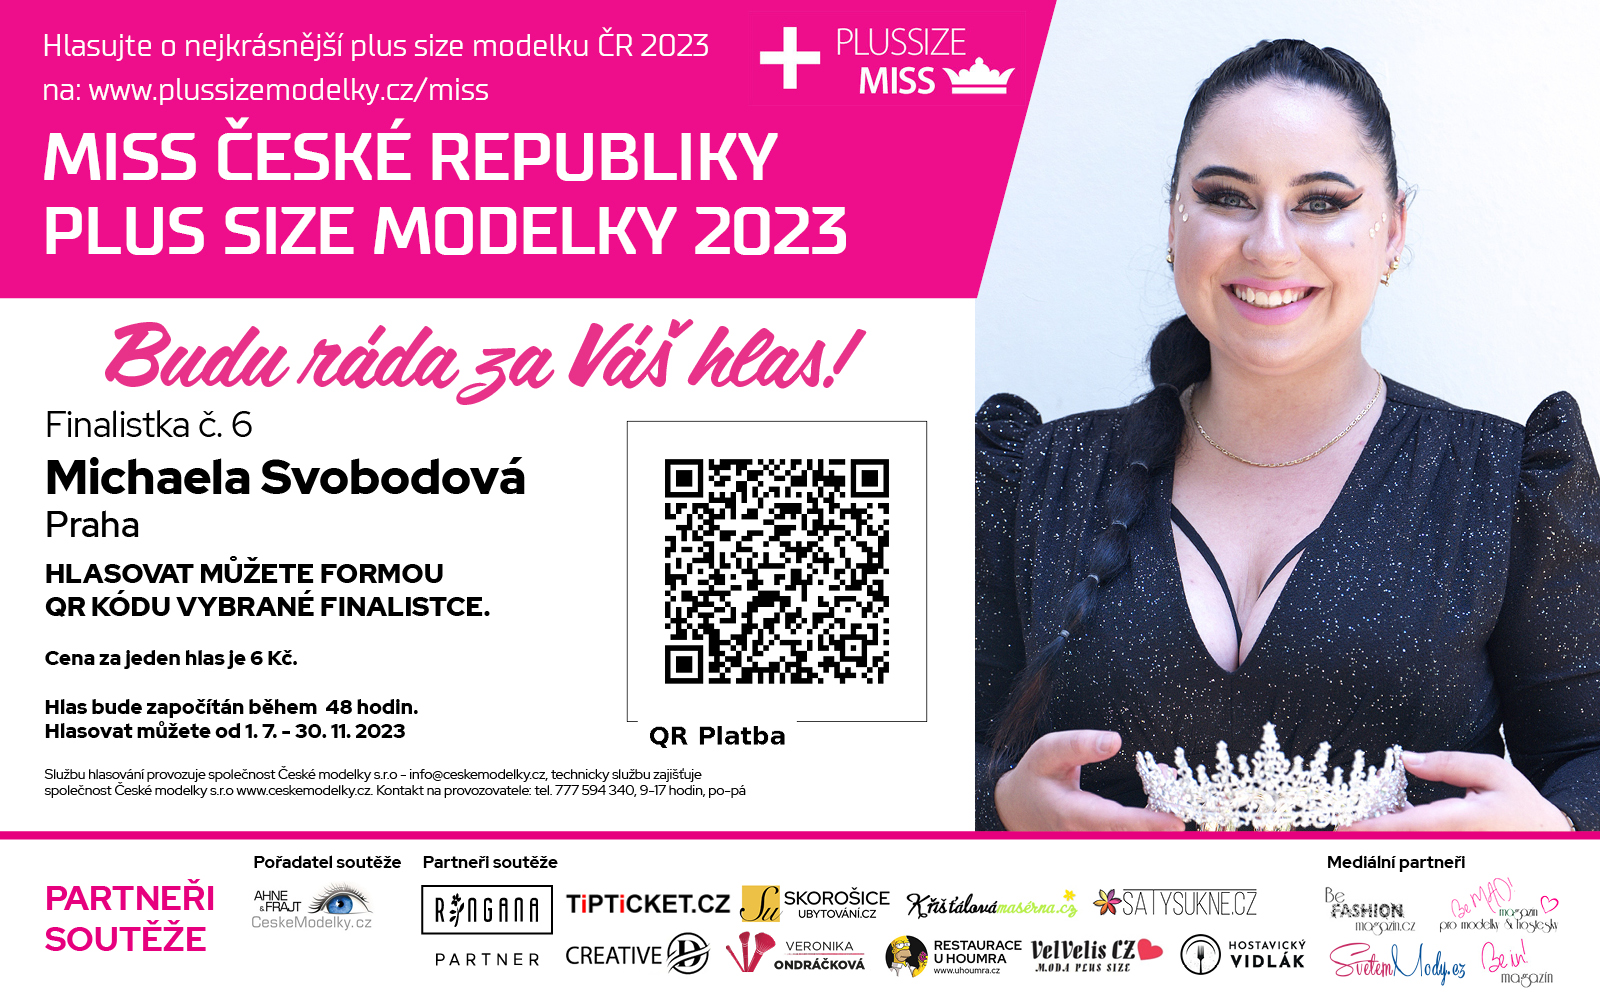 Michaela Svobodov finalistka .6 soute Miss Plus size modelky R 2023